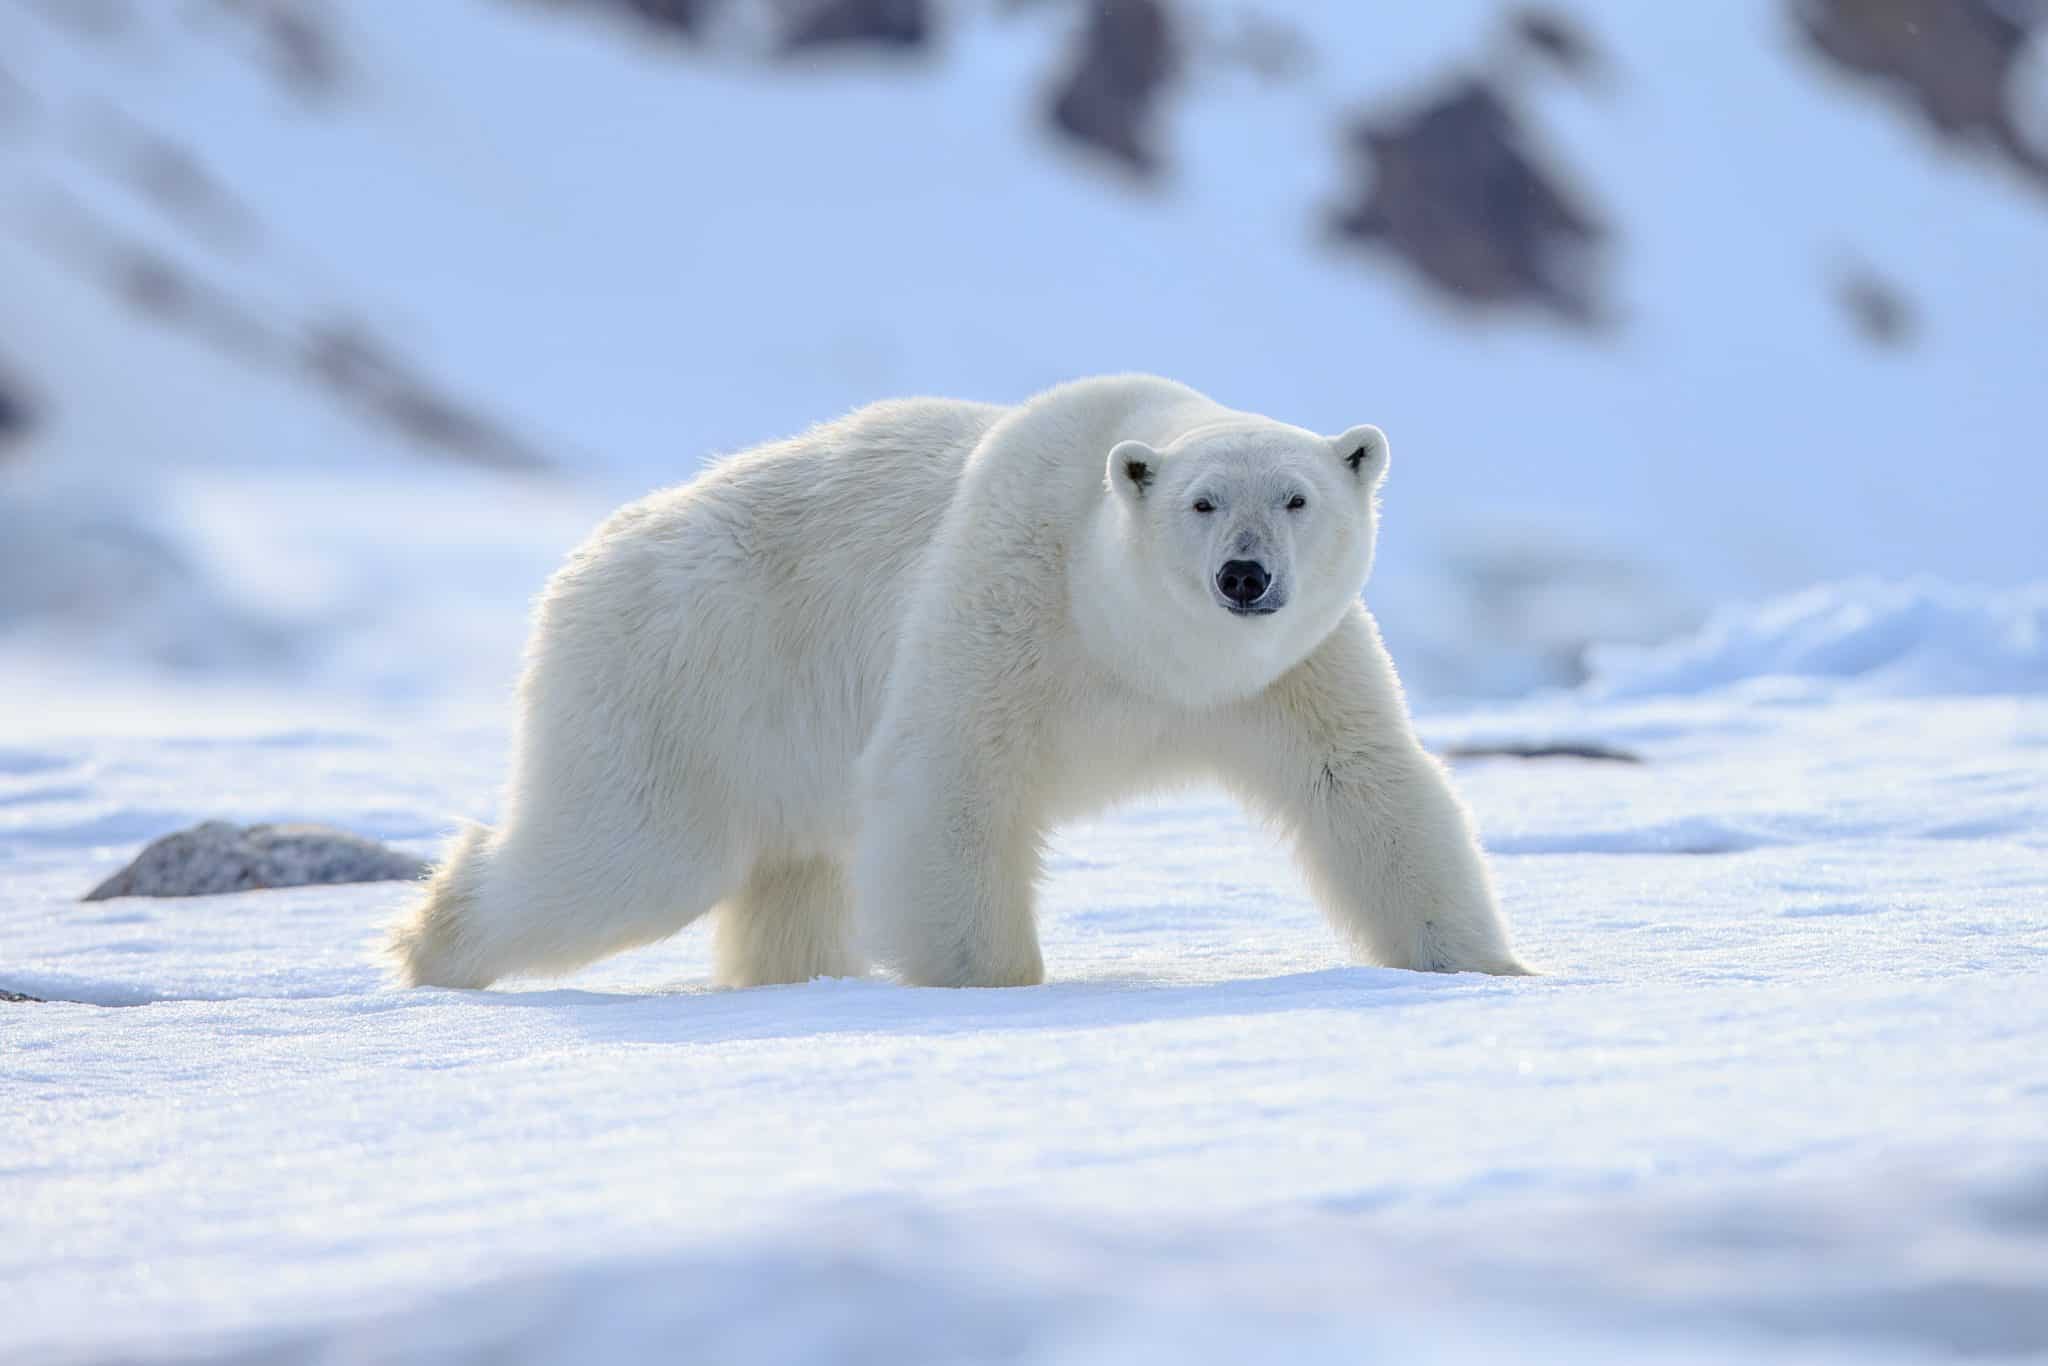 Petition: Ban Polar Bear Trophy Hunting